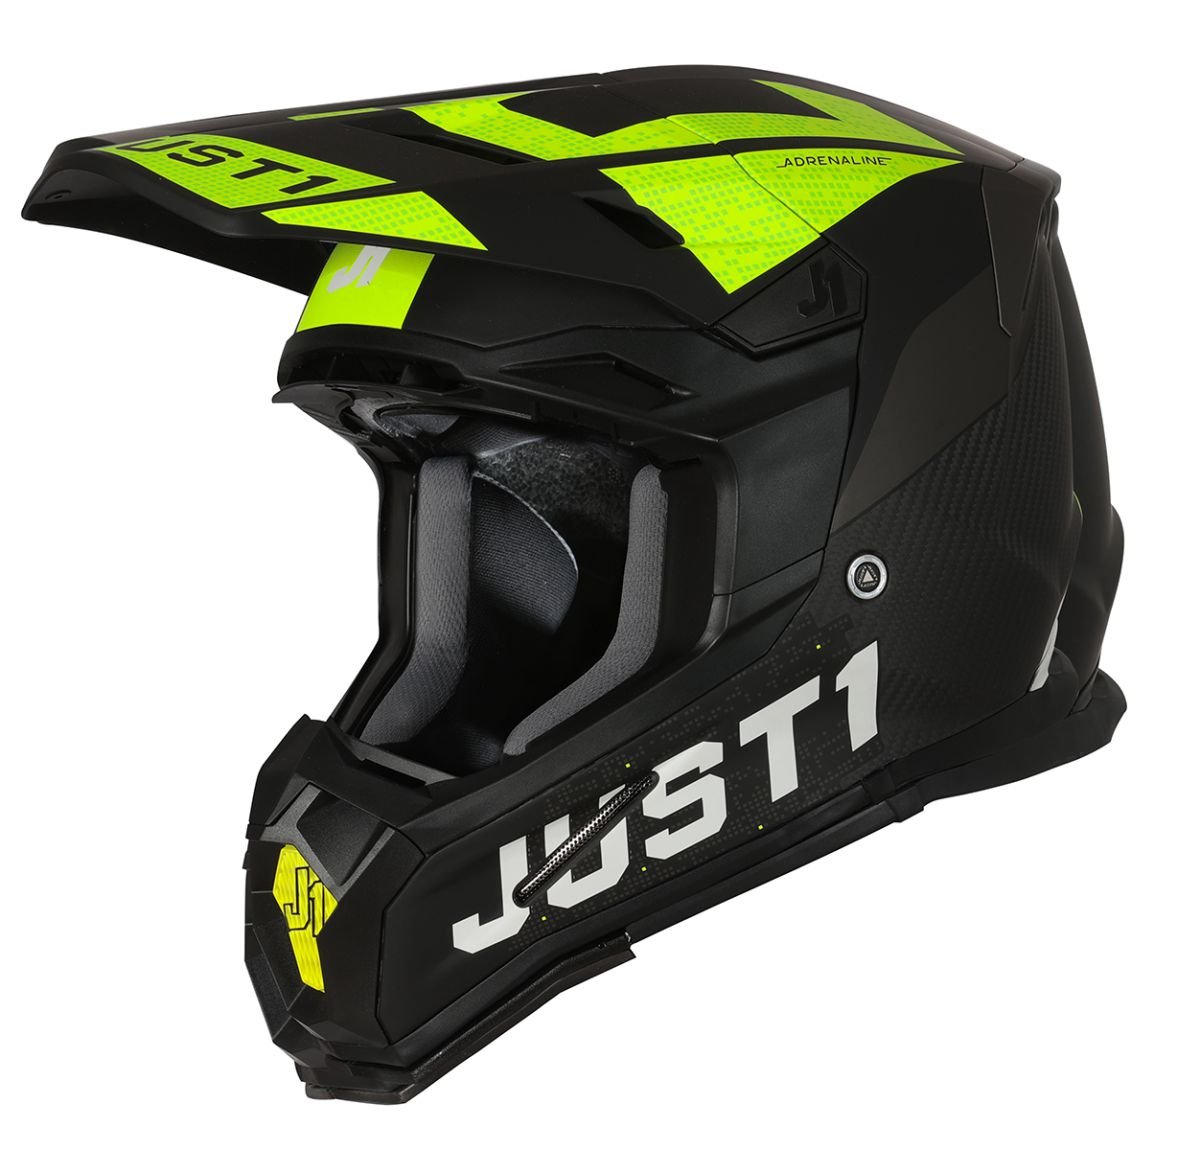 Image of Just1 Helmet J-22 Adrenaline Noir Jaune Fluo Carbon Mat Casque Cross Taille S